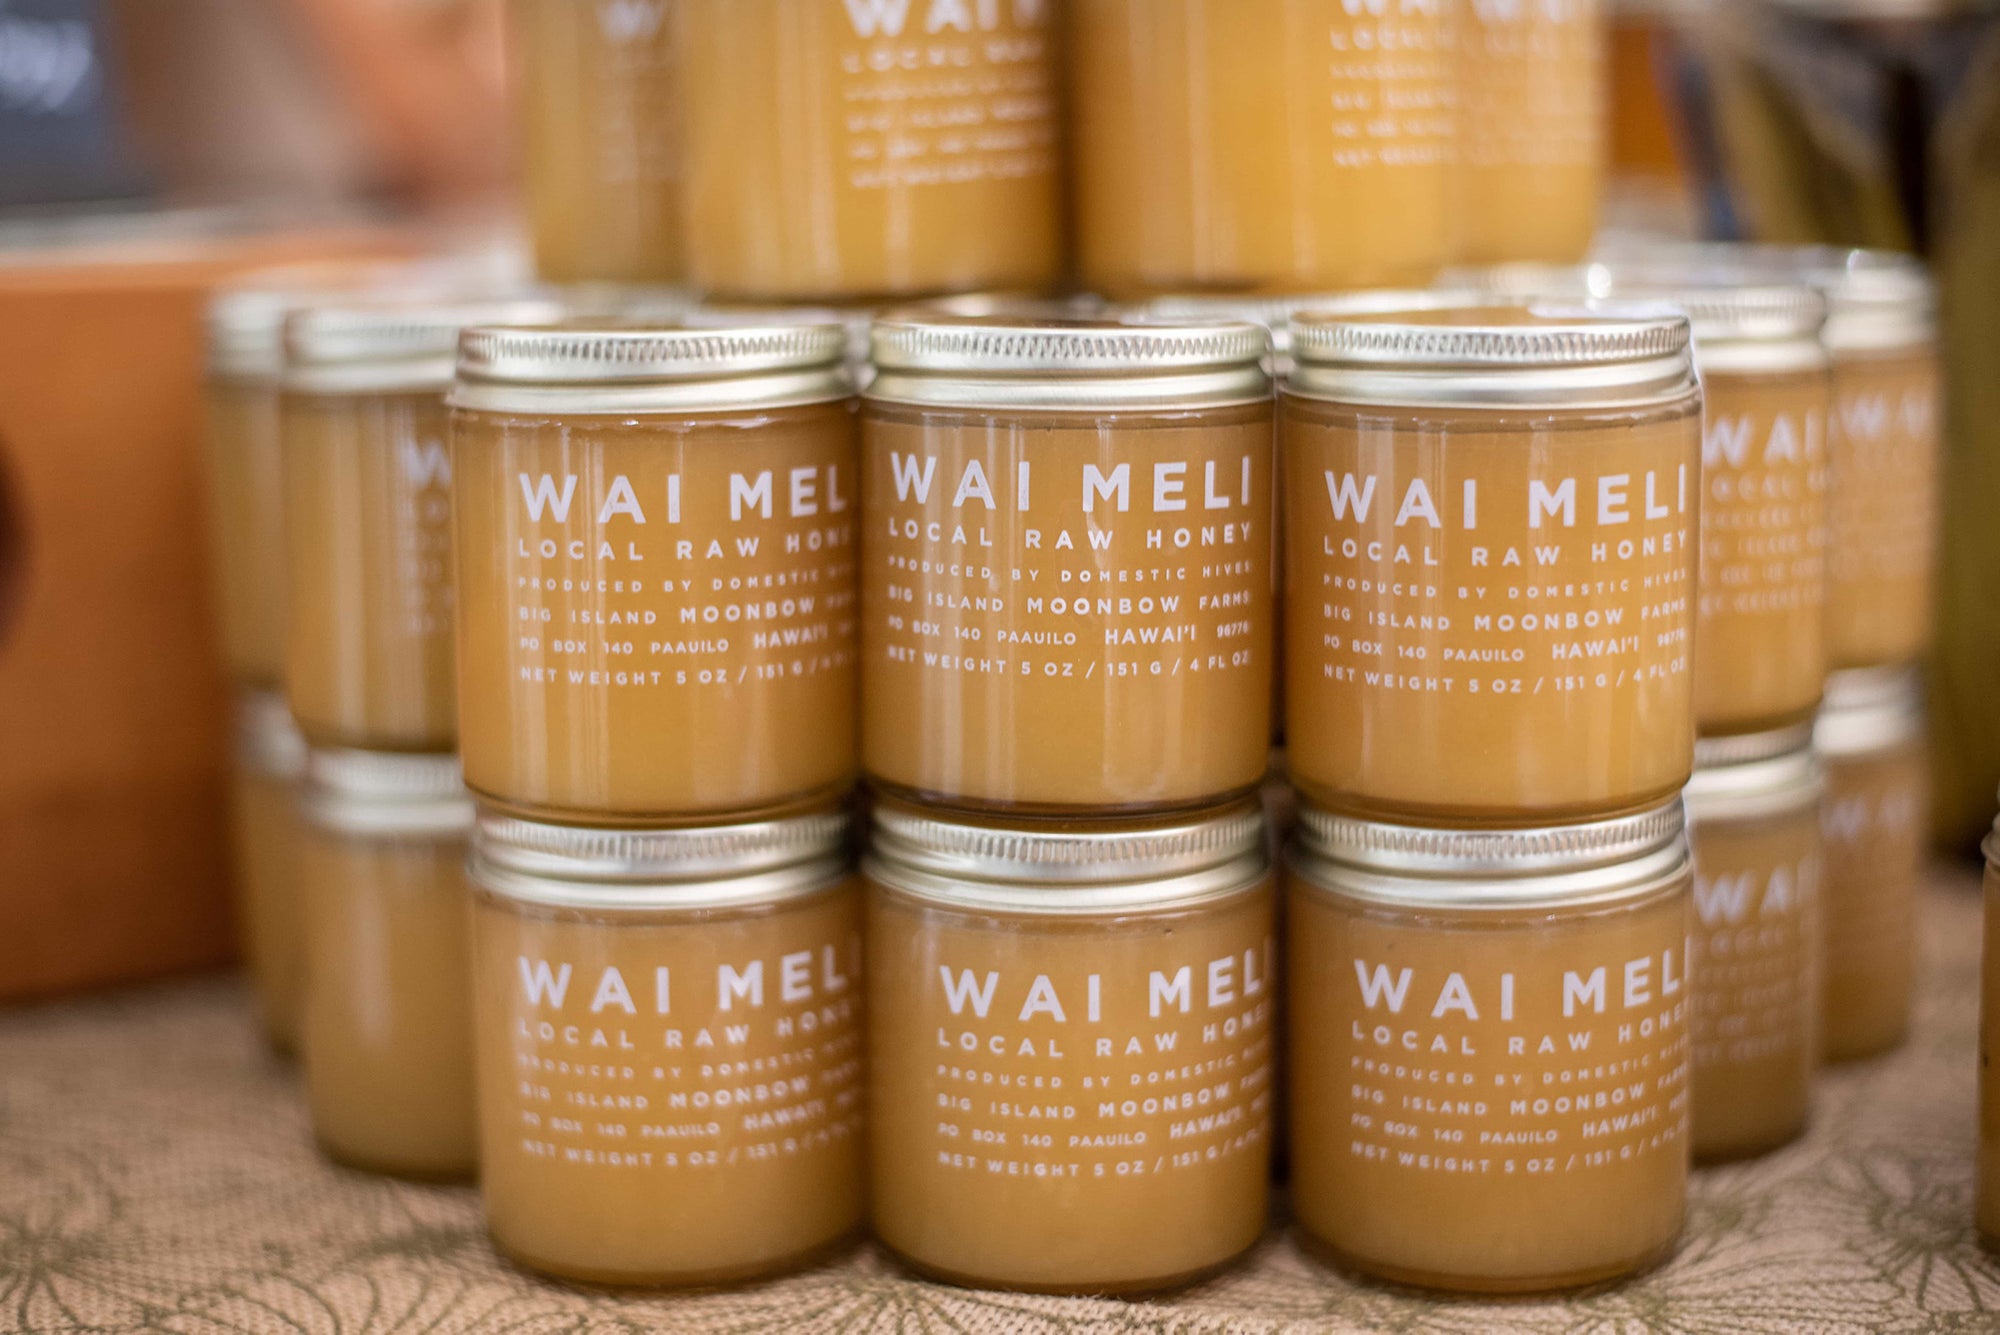 Multiple stacked jars of Wai Meli Local Raw Honey